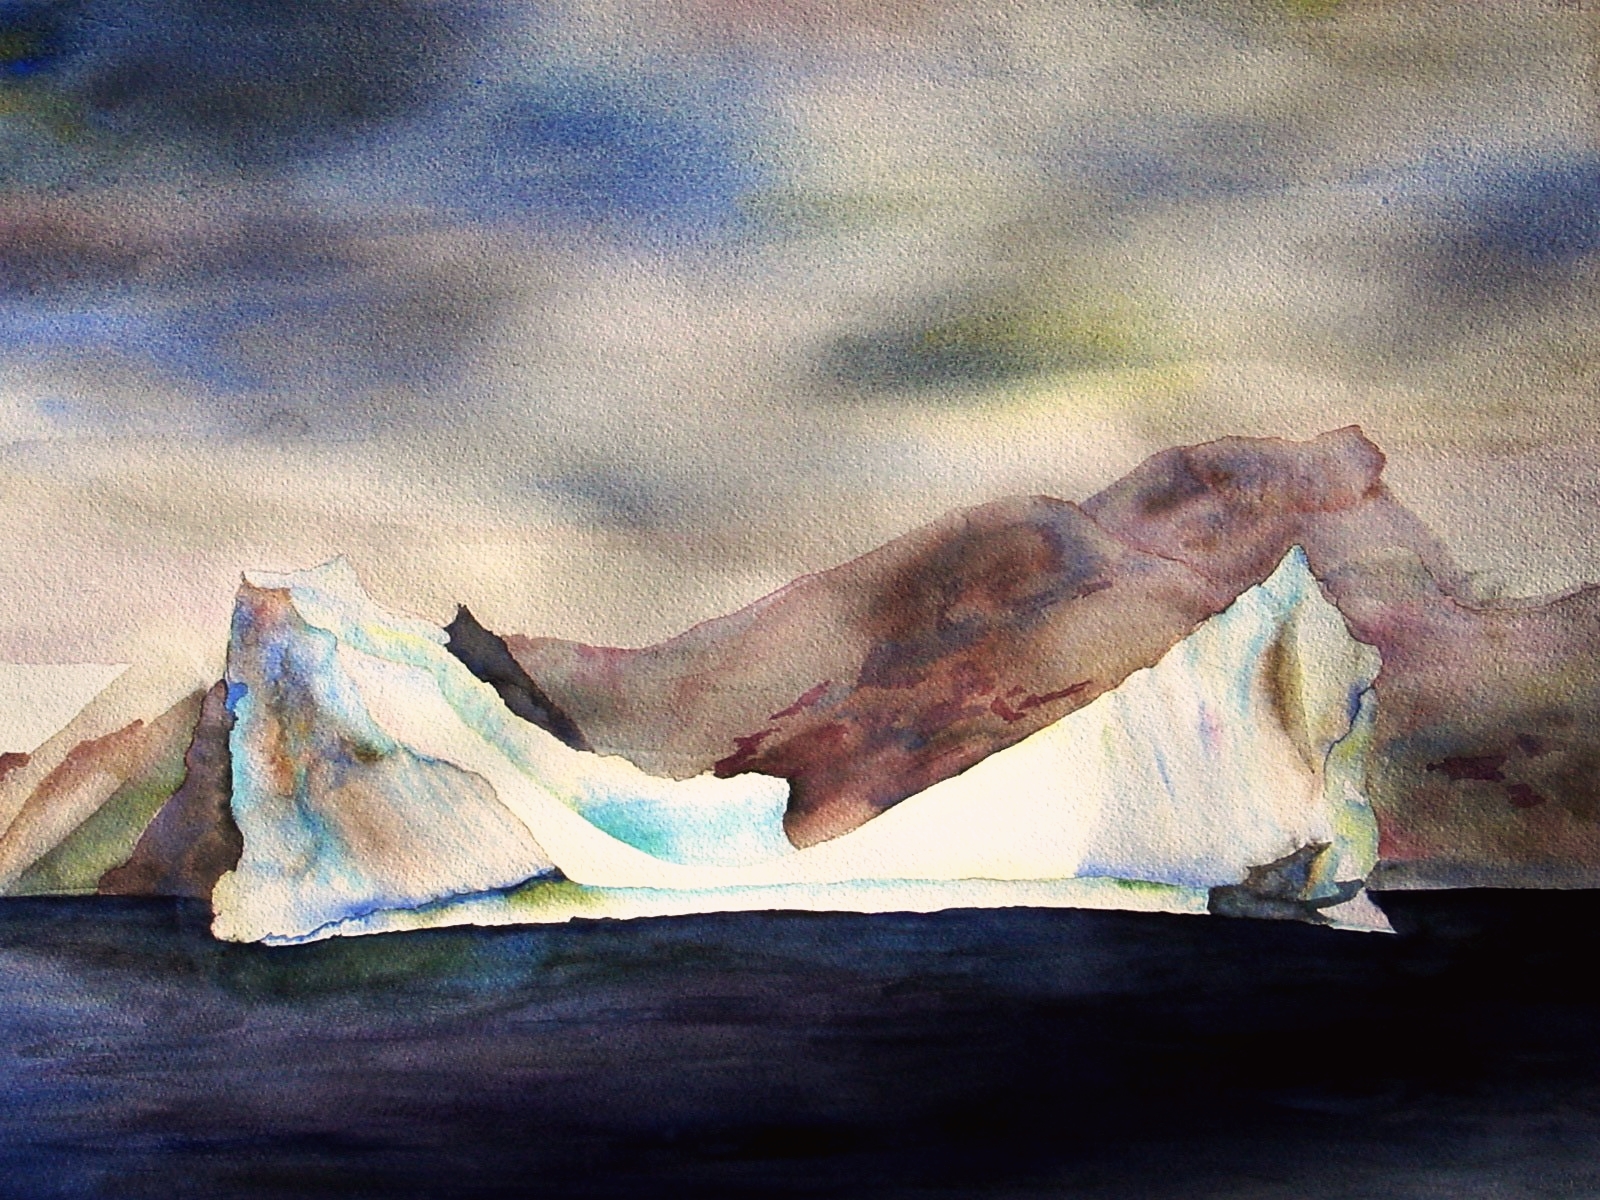 Iceberg From Our Zodiac, Antarctica No. 2 - 24 x 36” watercolor by Lisa Goren, 2005.